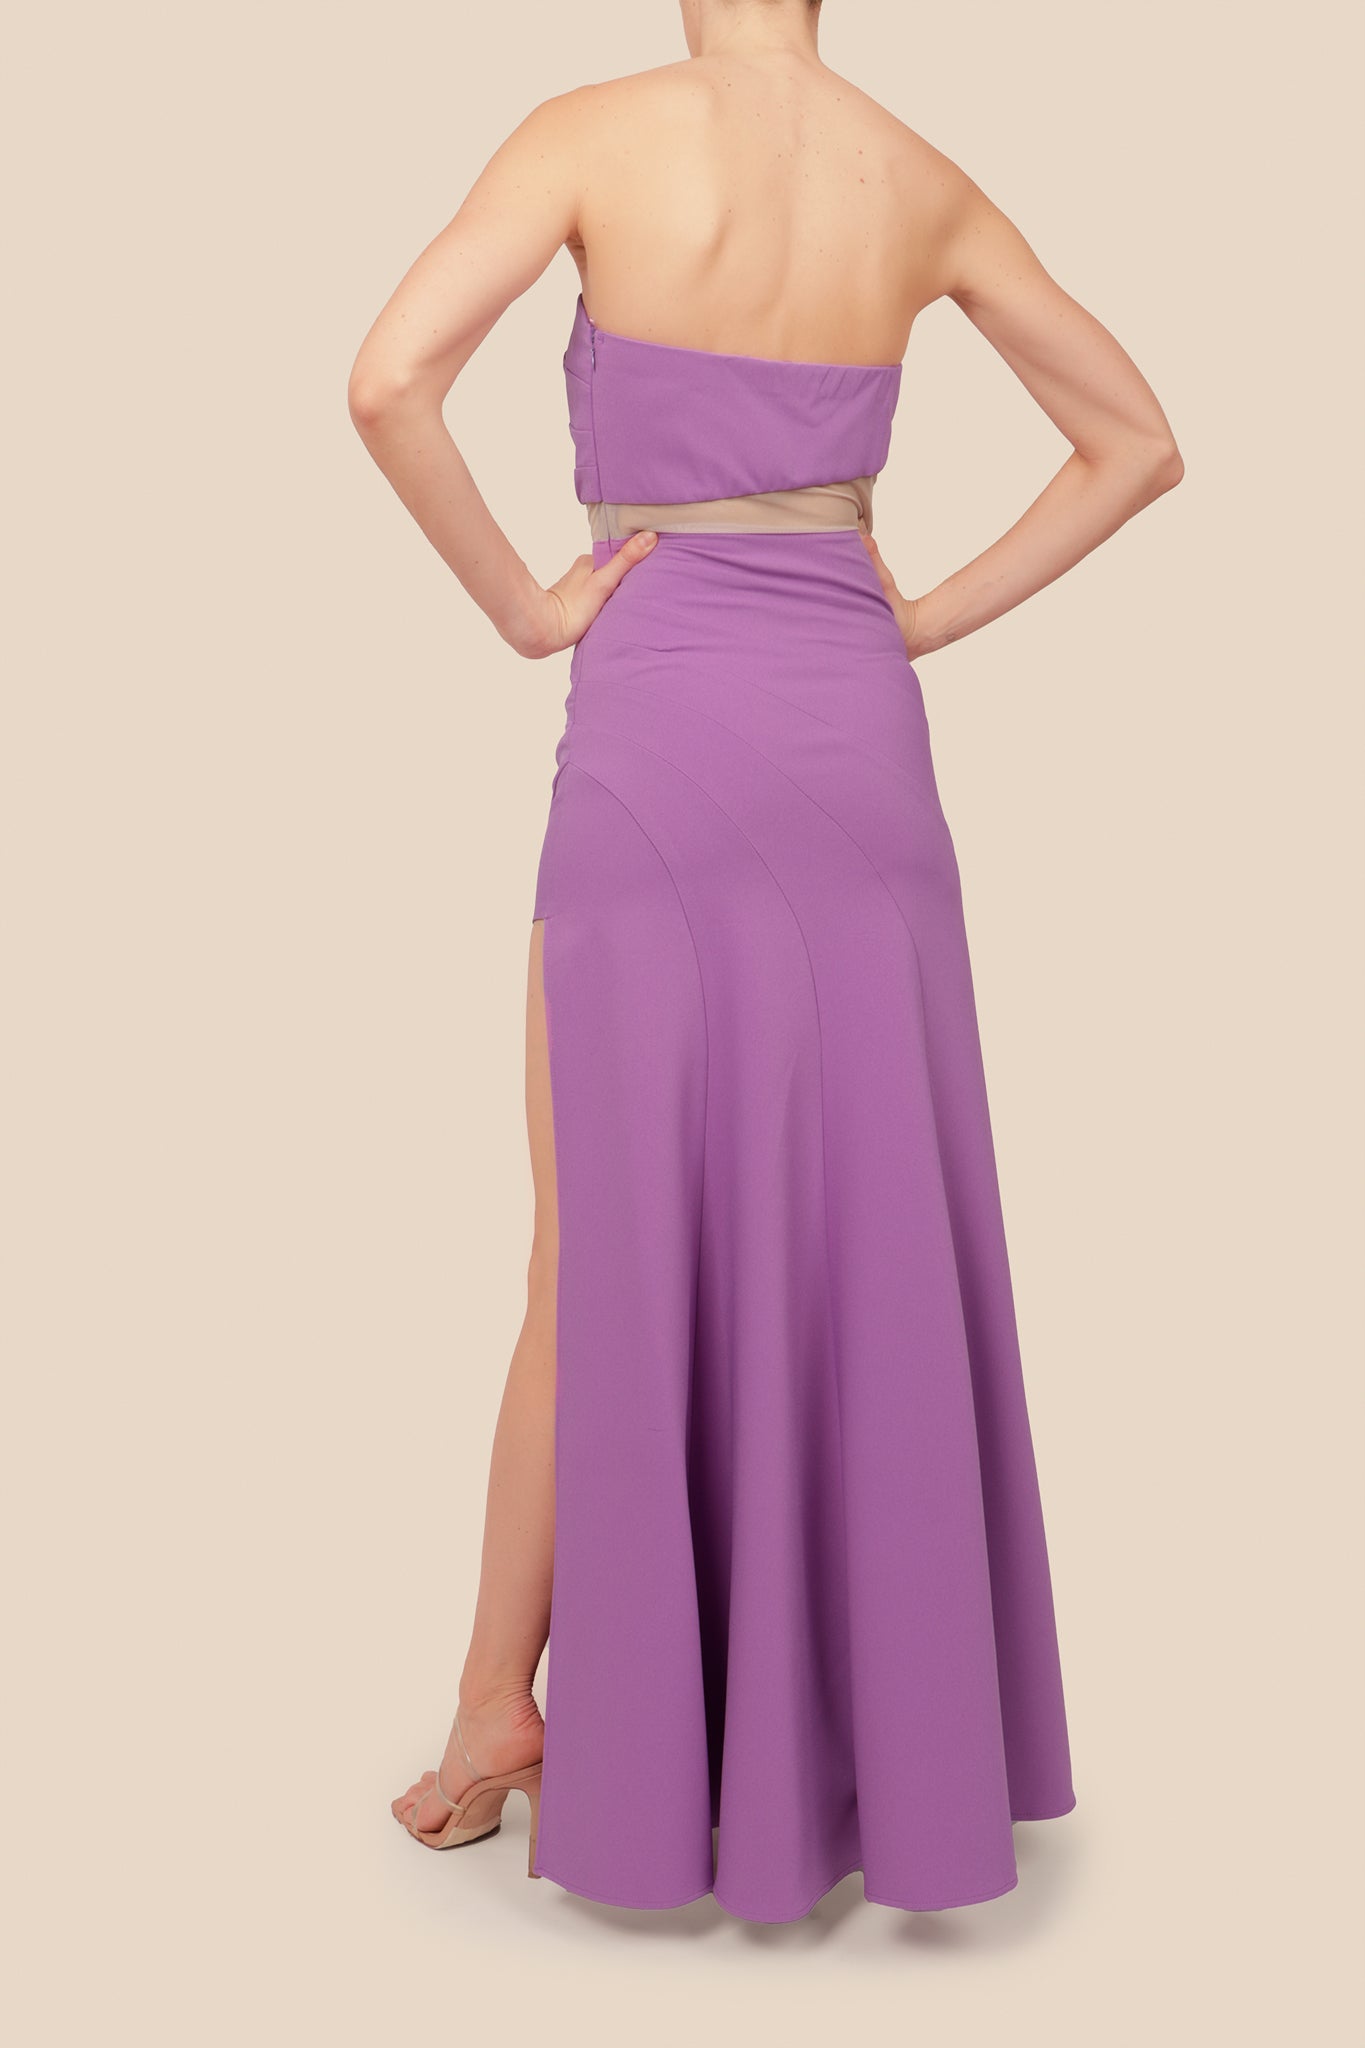 Vestido crepe strapless transparencia lila